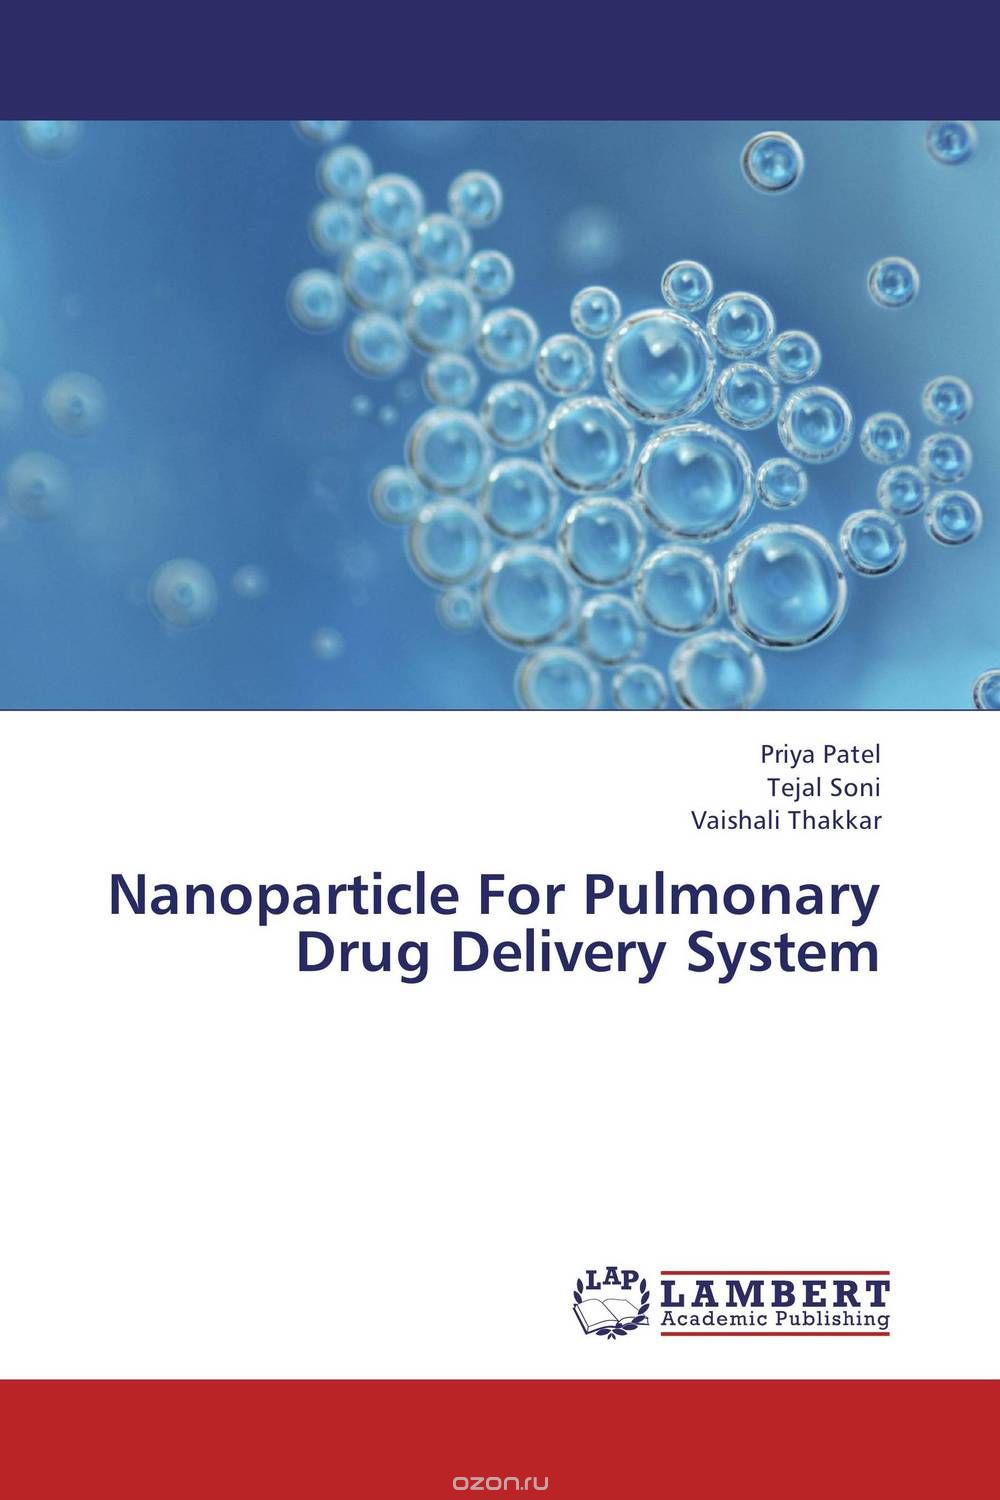 Скачать книгу "Nanoparticle For Pulmonary Drug Delivery System"